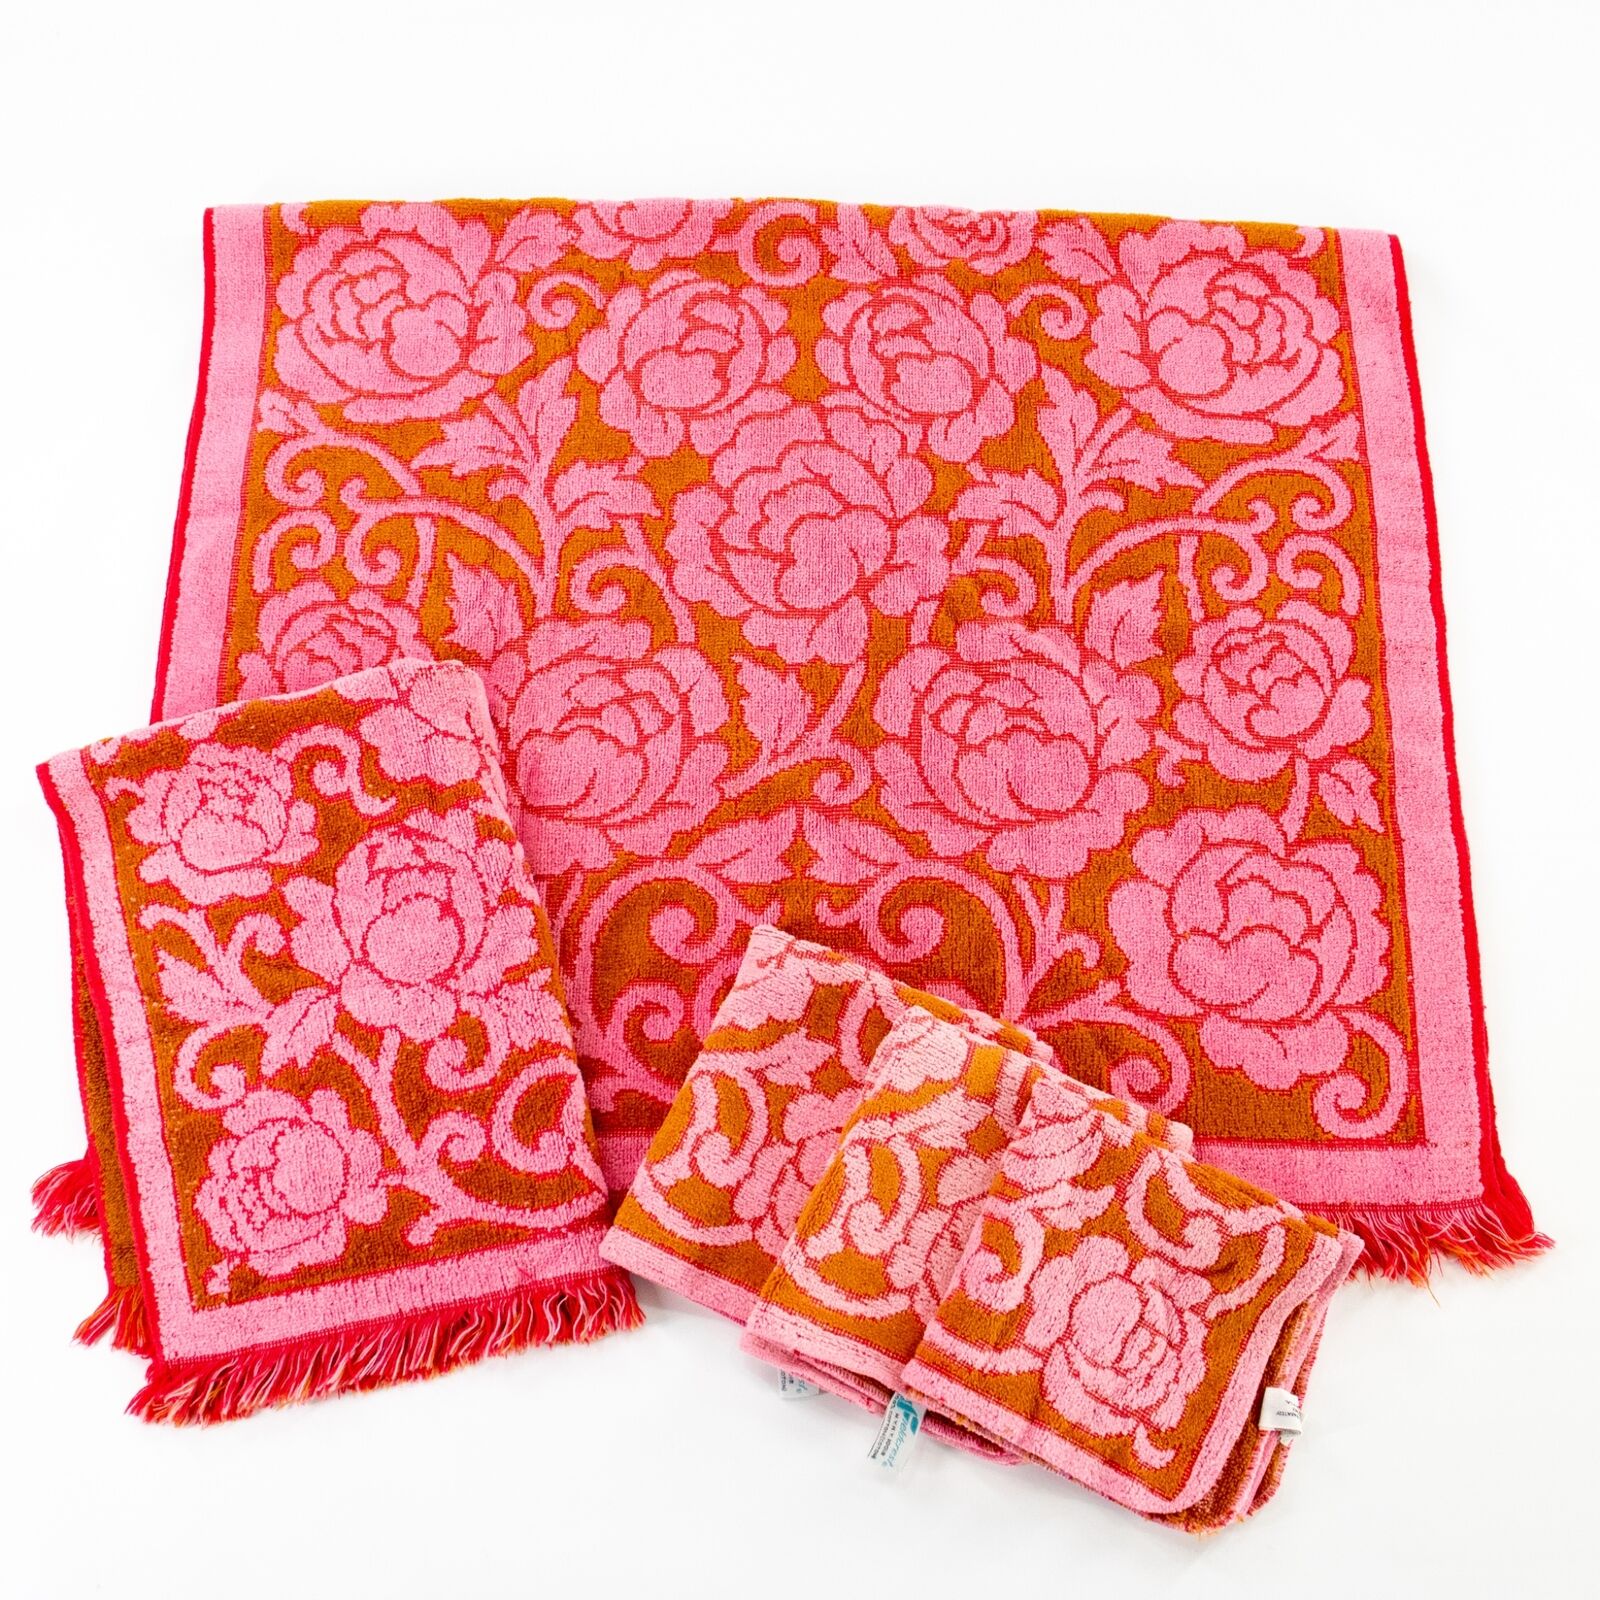 Vintage Fieldcrest Towel Set 1960s Pink Brown Roses Floral Flower Power 5 Pieces